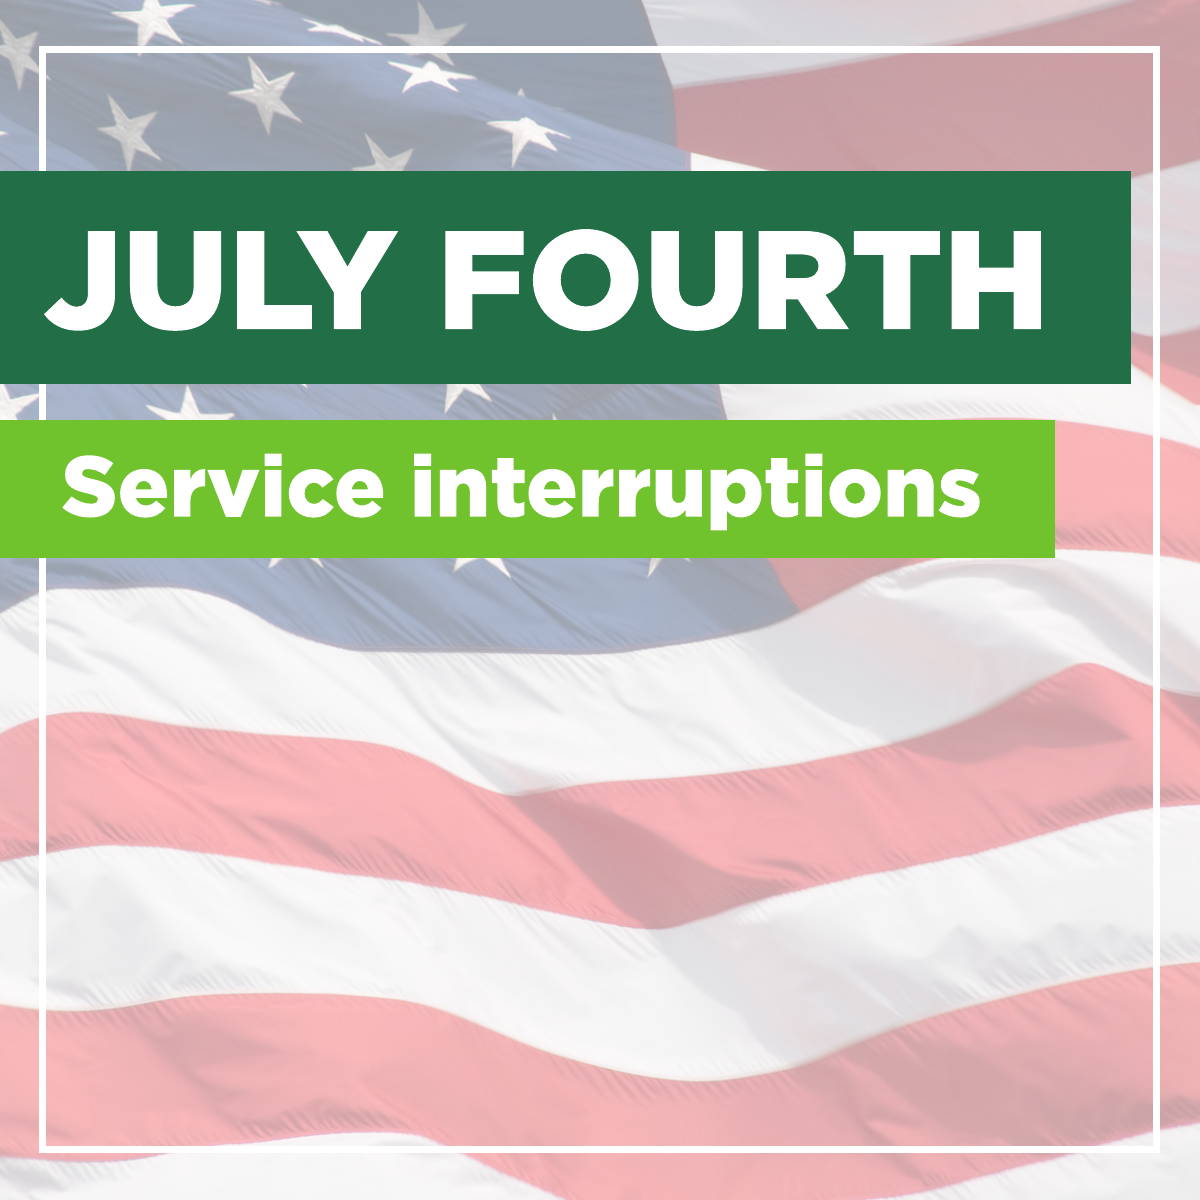 July 4th service interruptions